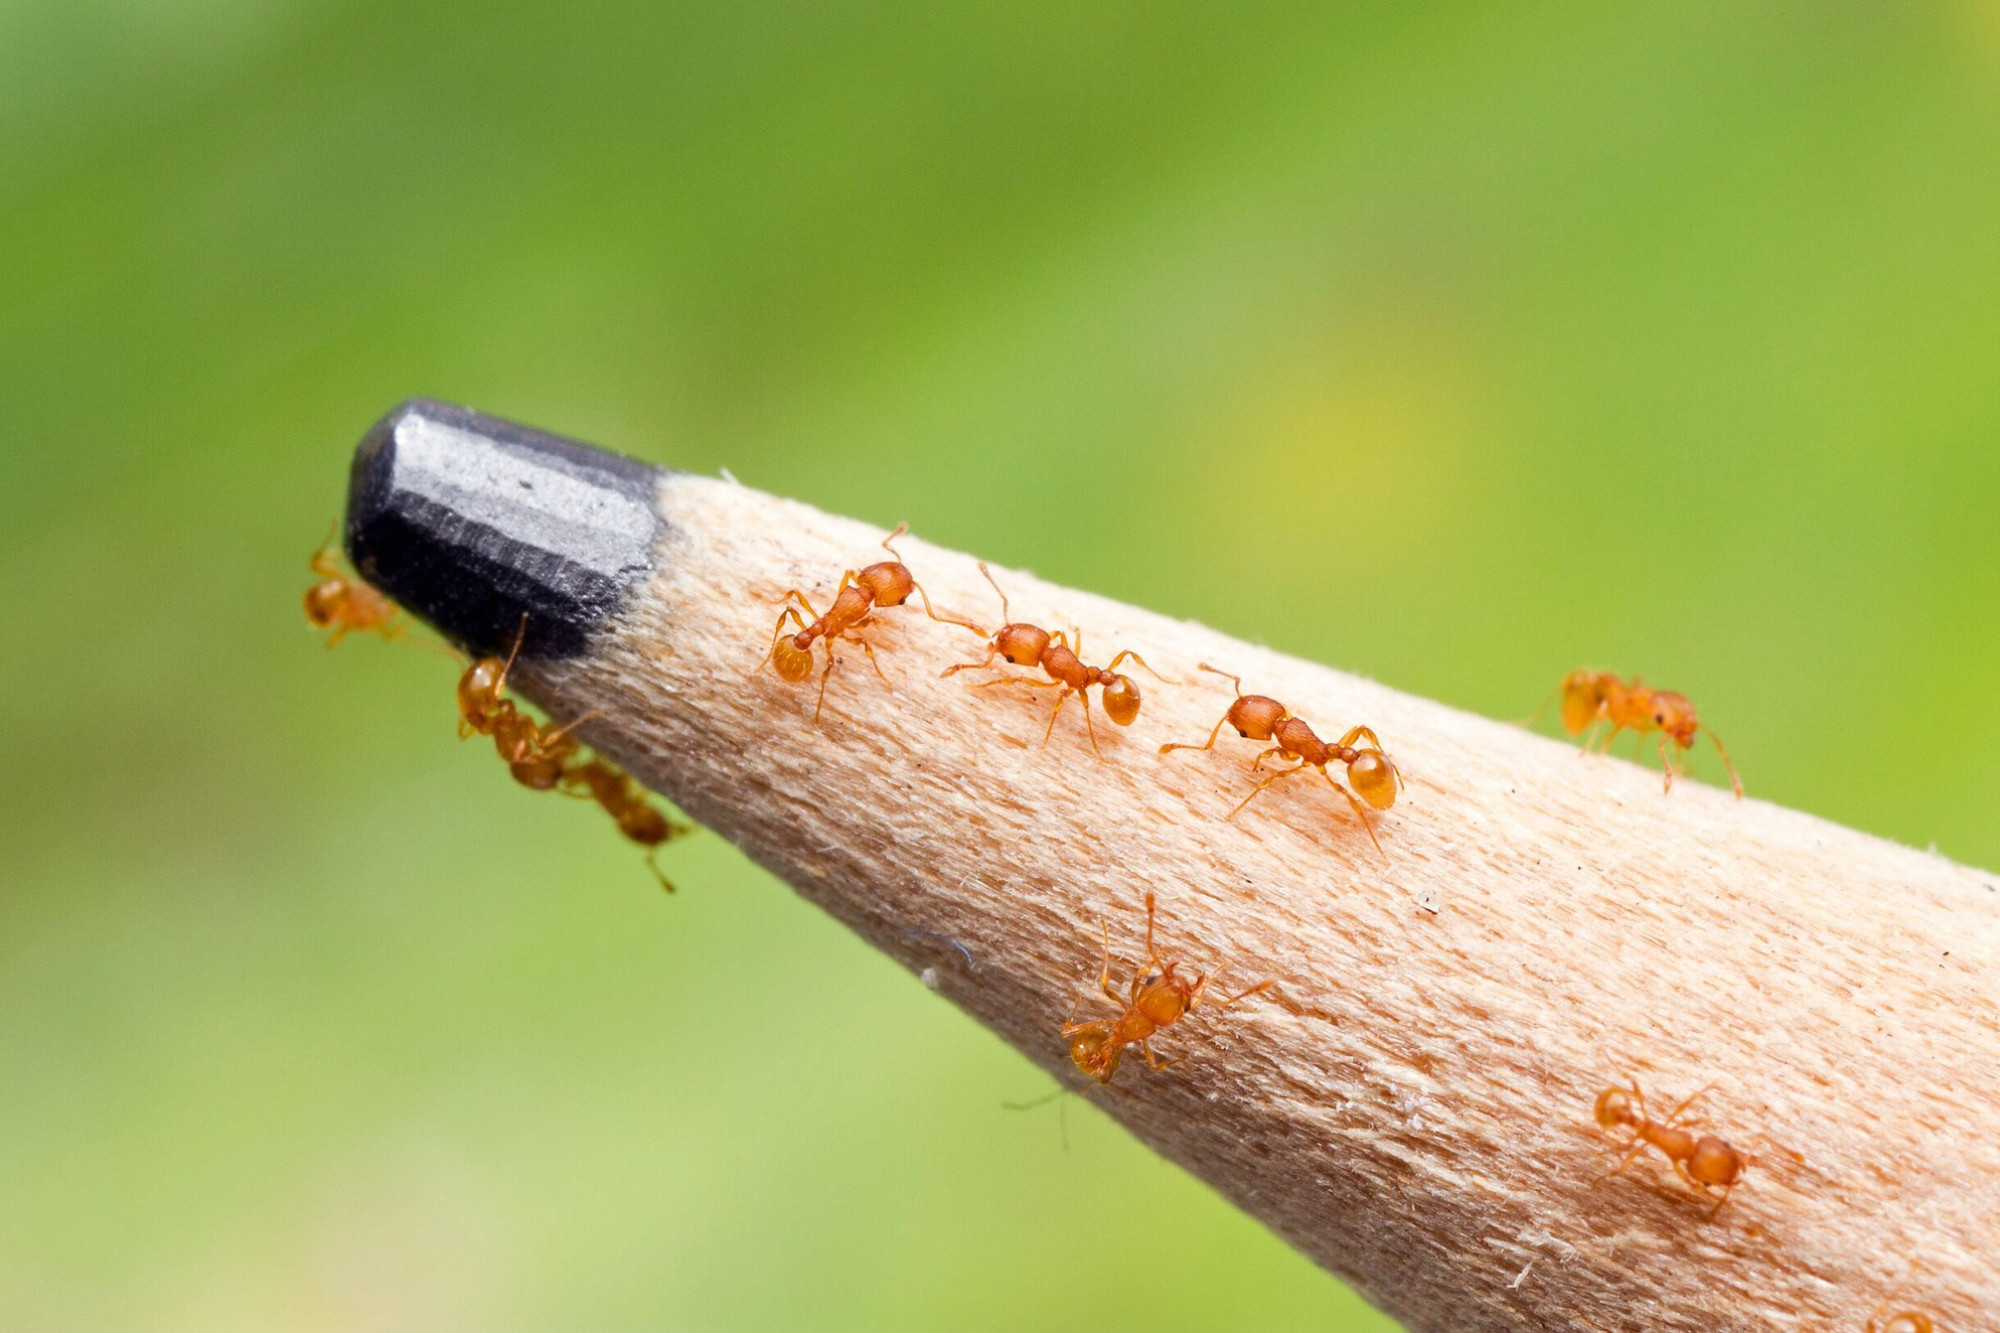 Help zap electric ants in Kuranda - feature photo